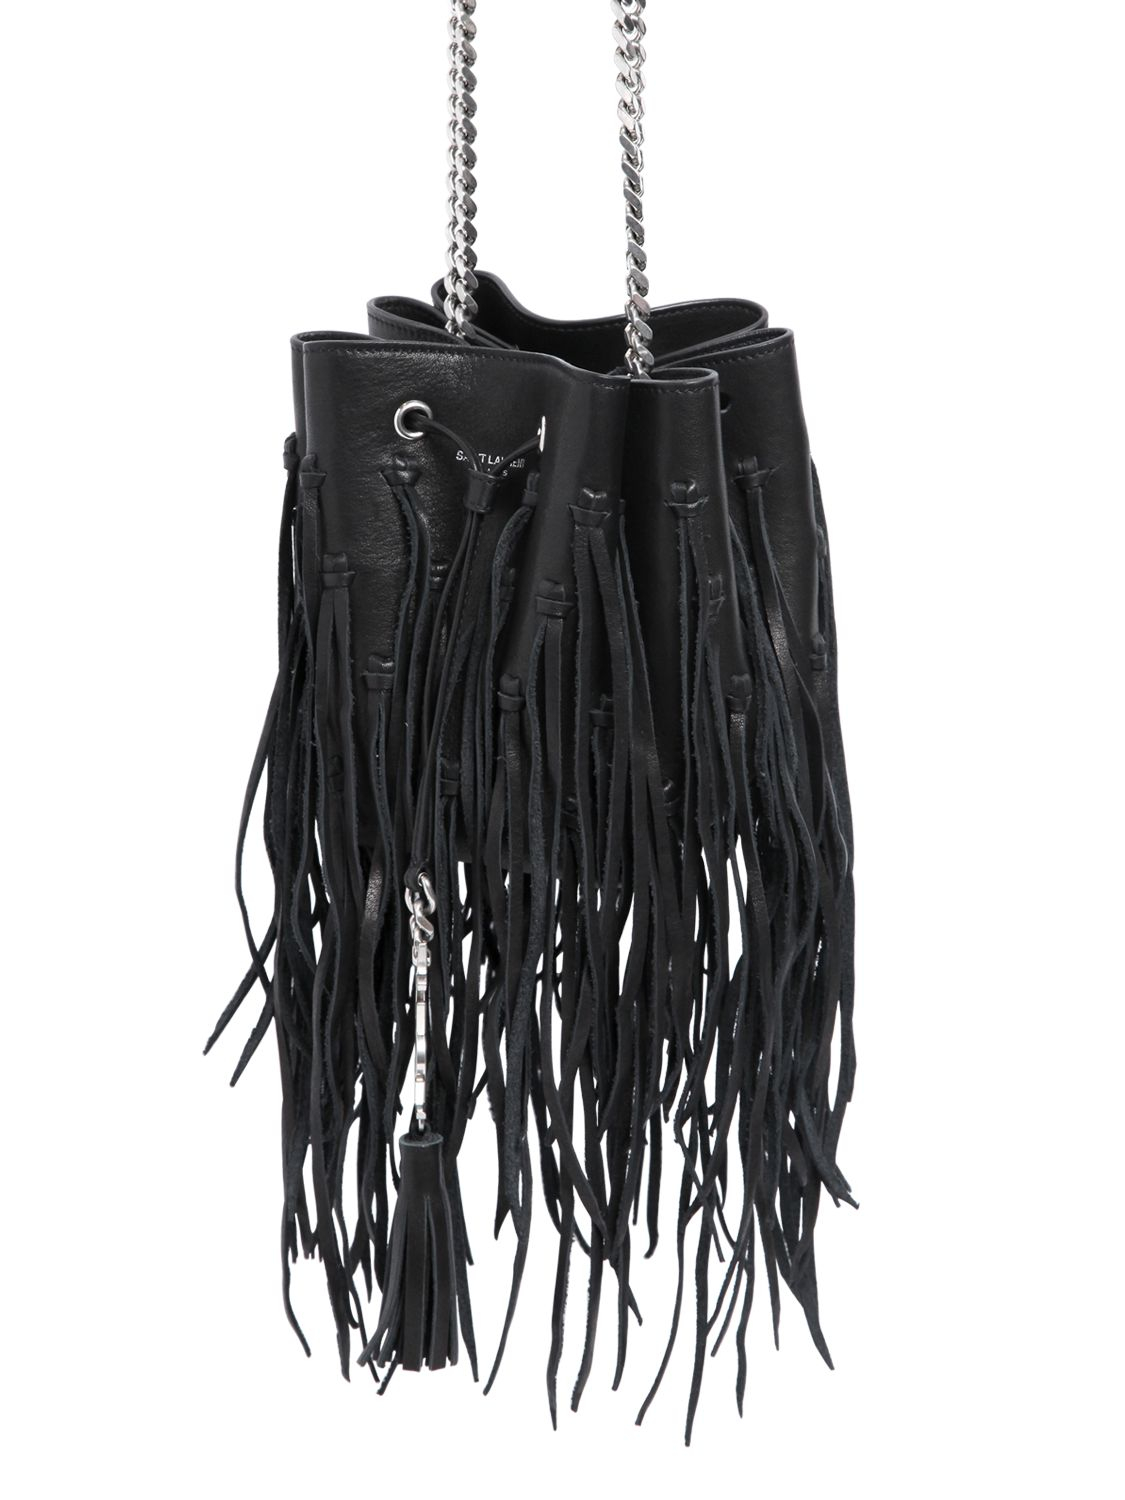 Saint Laurent Ysl Pendant Fringed Leather Bucket Bag in Black | Lyst